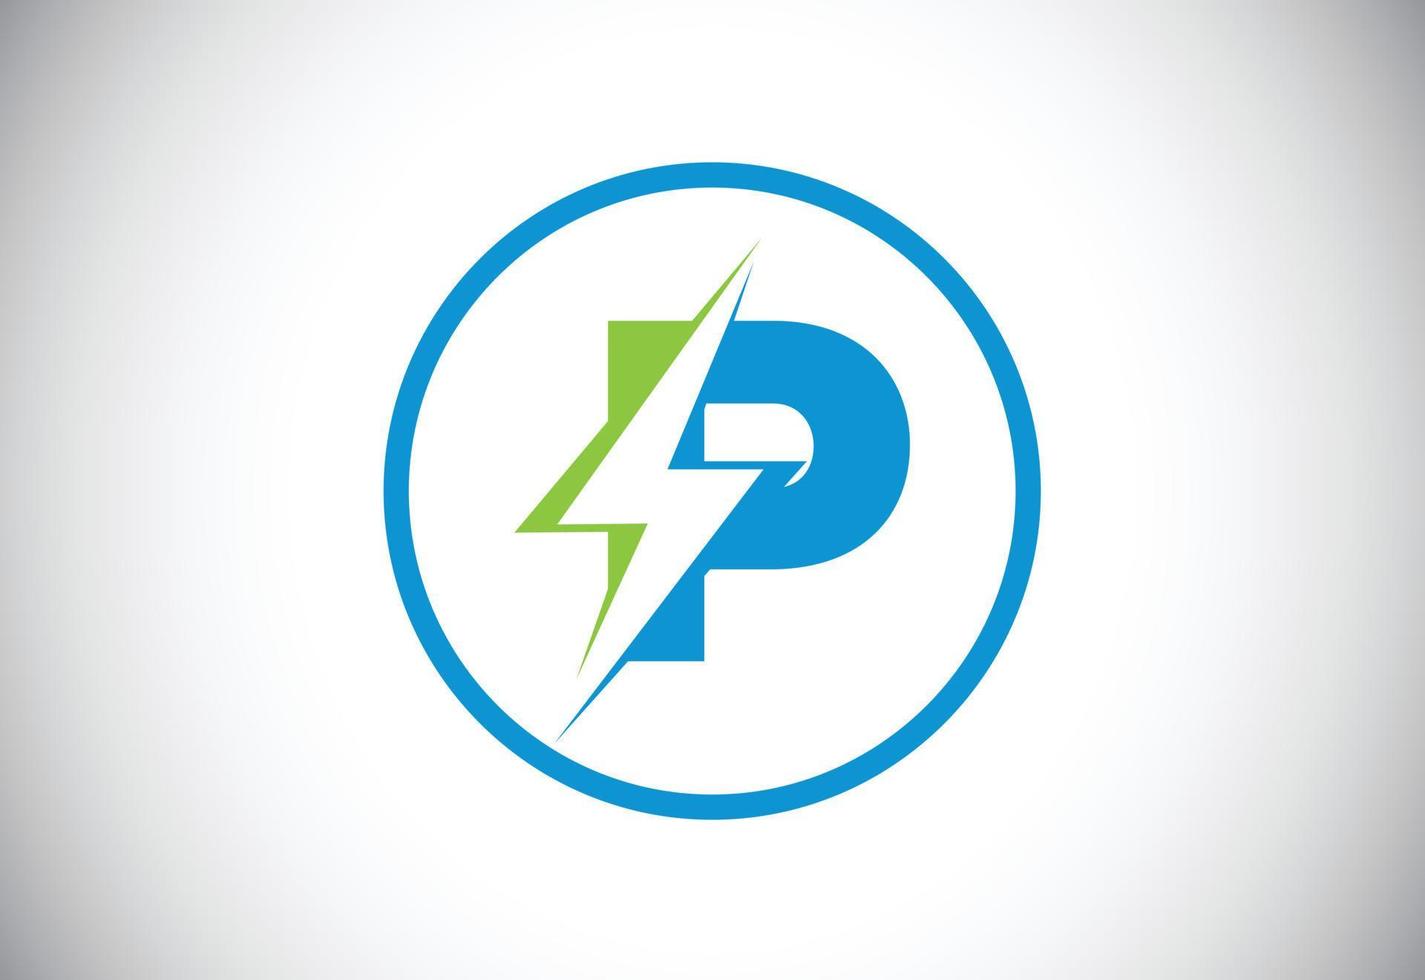 eerste p brief logo ontwerp met verlichting donder bout. elektrisch bout brief logo vector